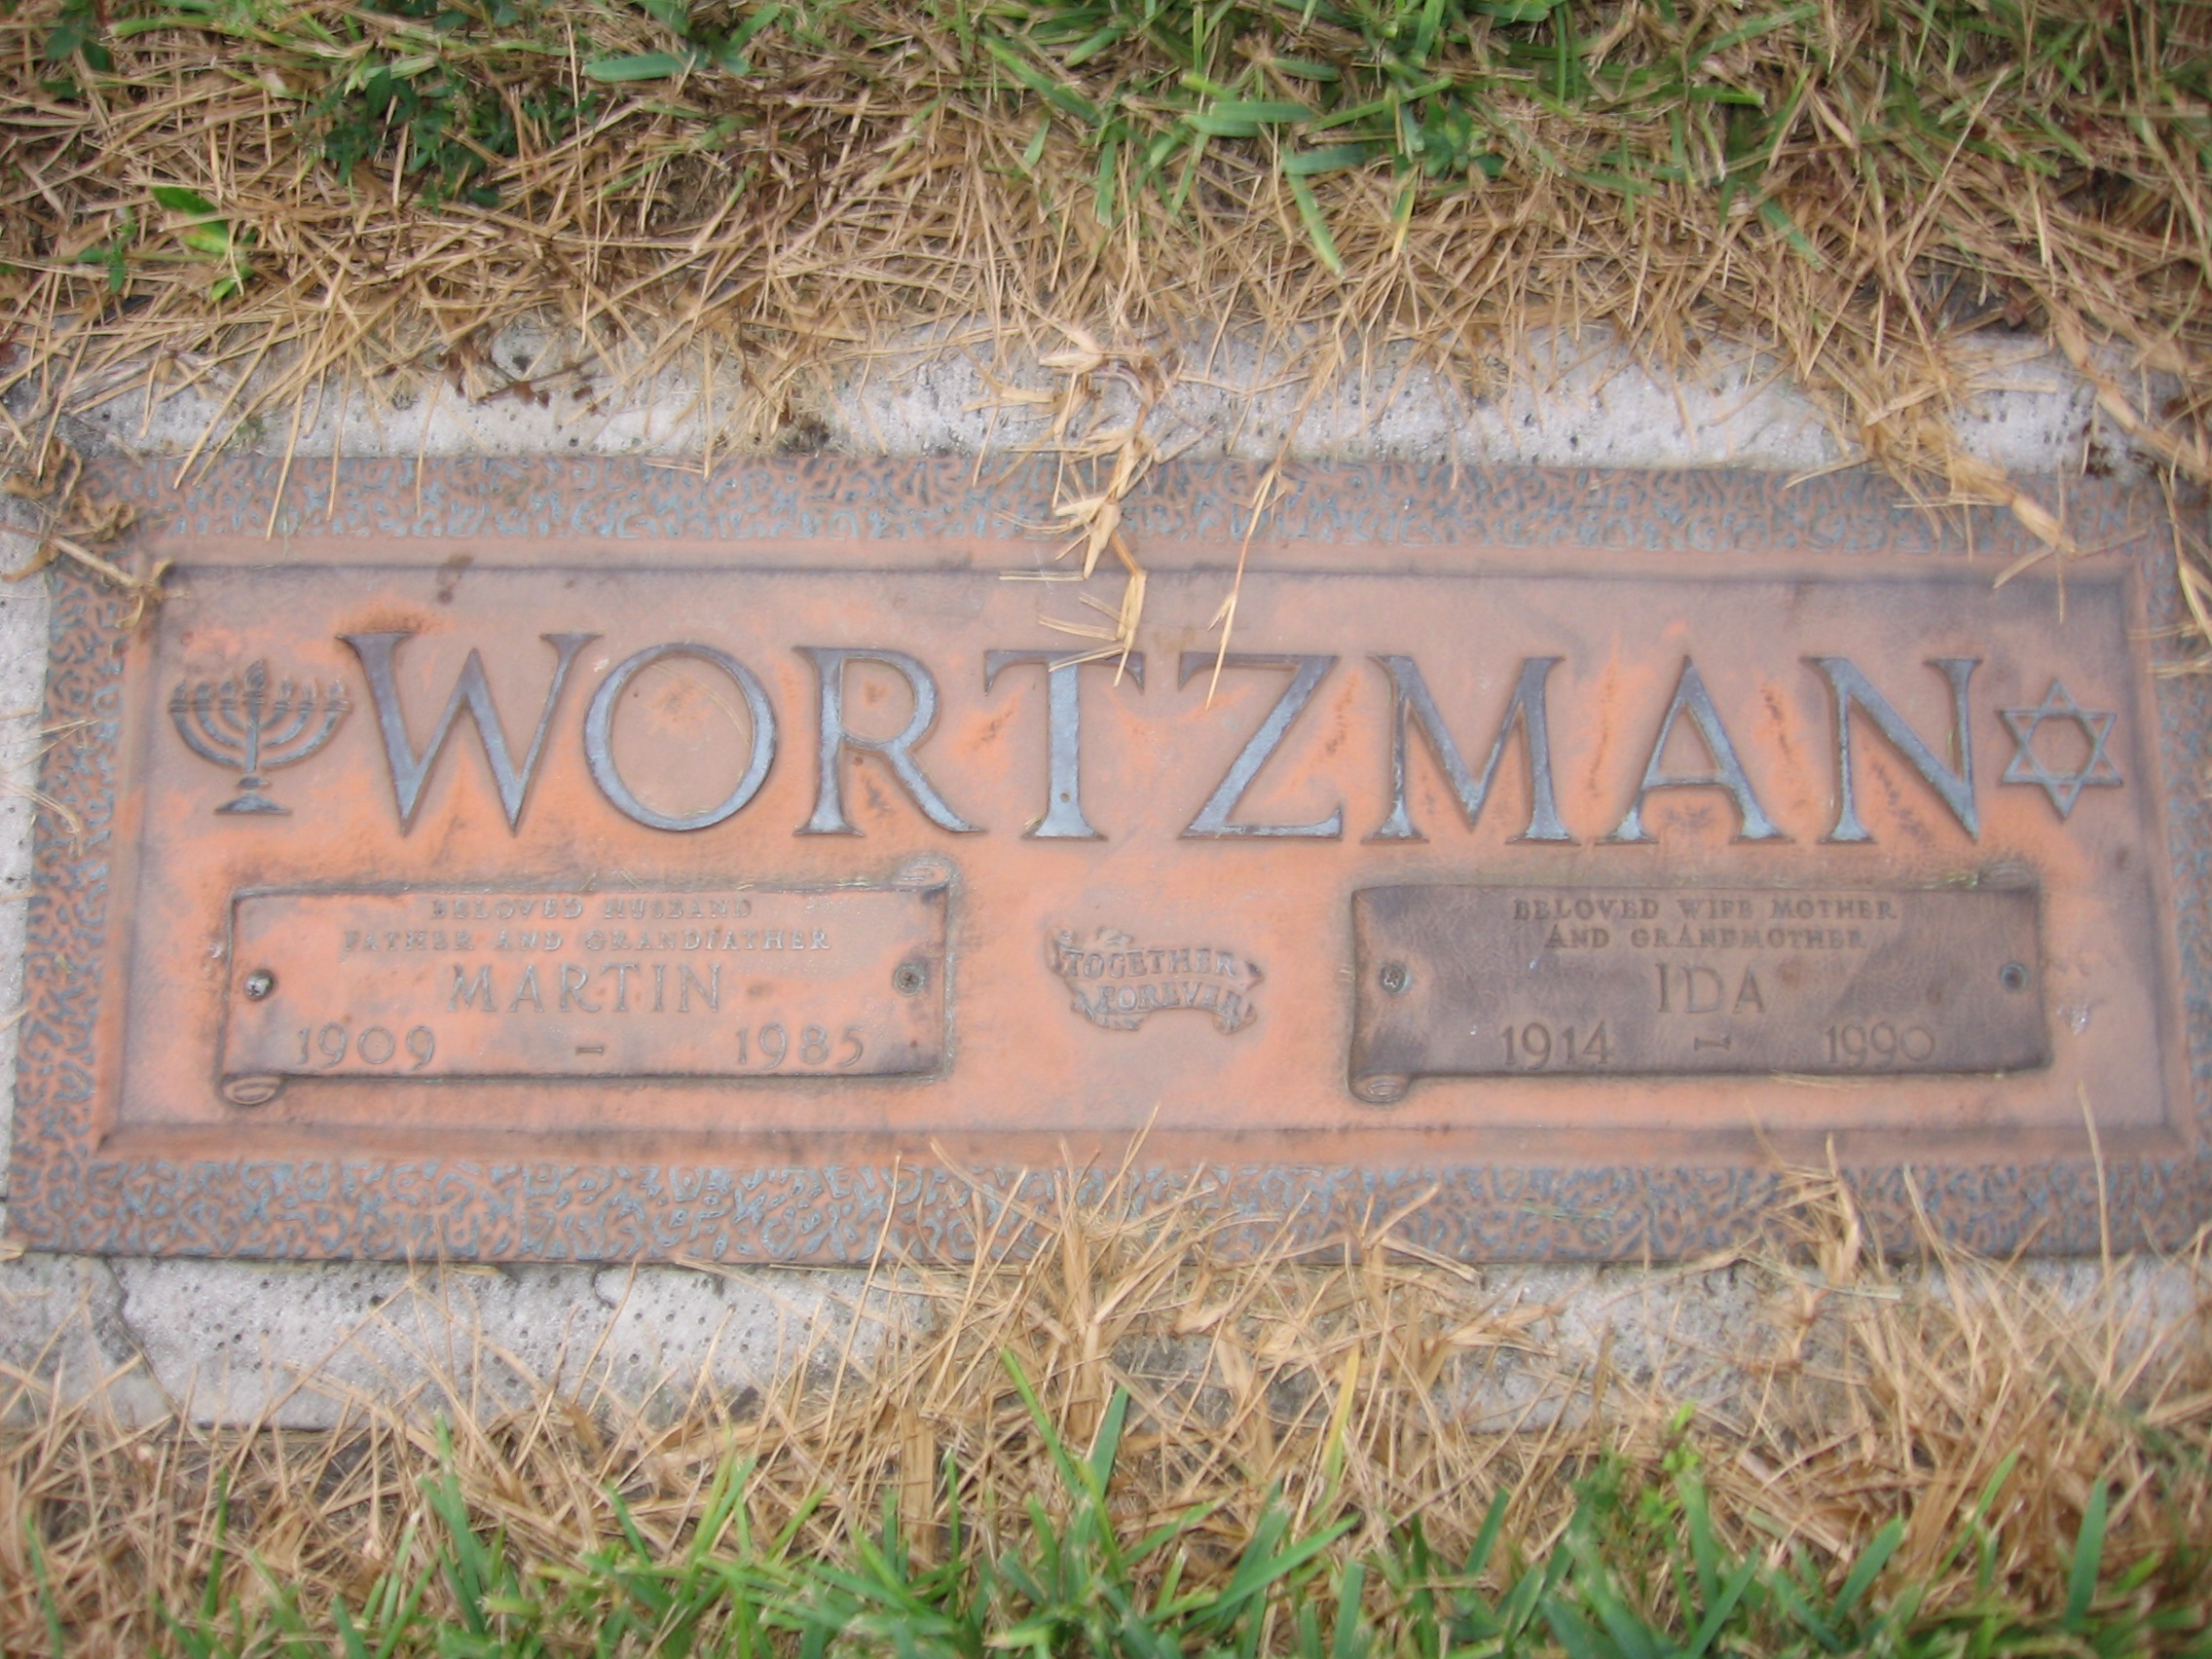 Martin Wortzman